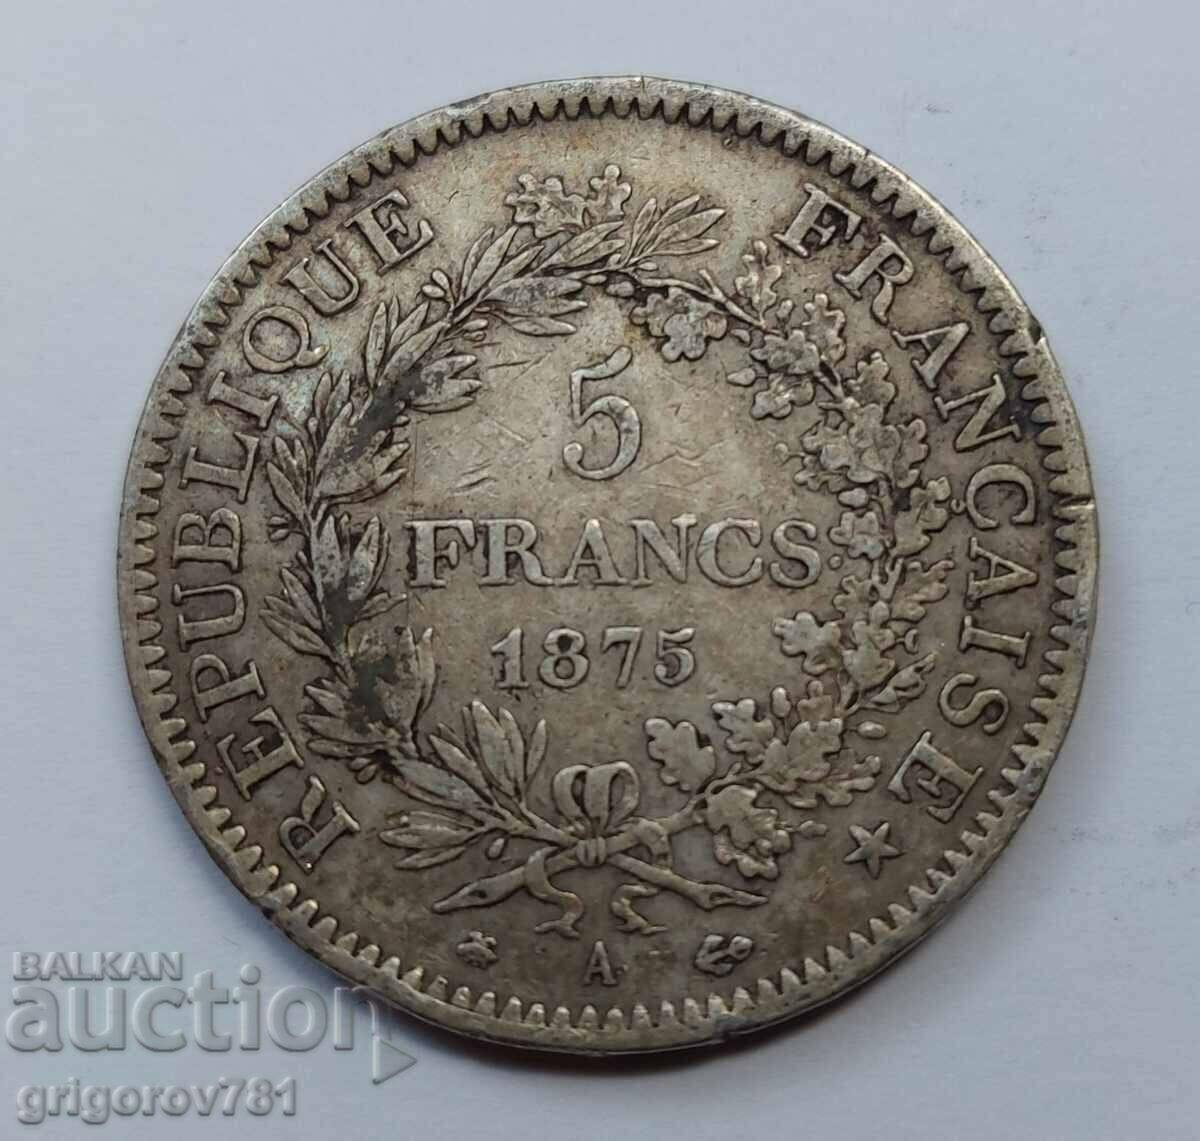 5 Francs Silver France 1875 A - Silver Coin #203